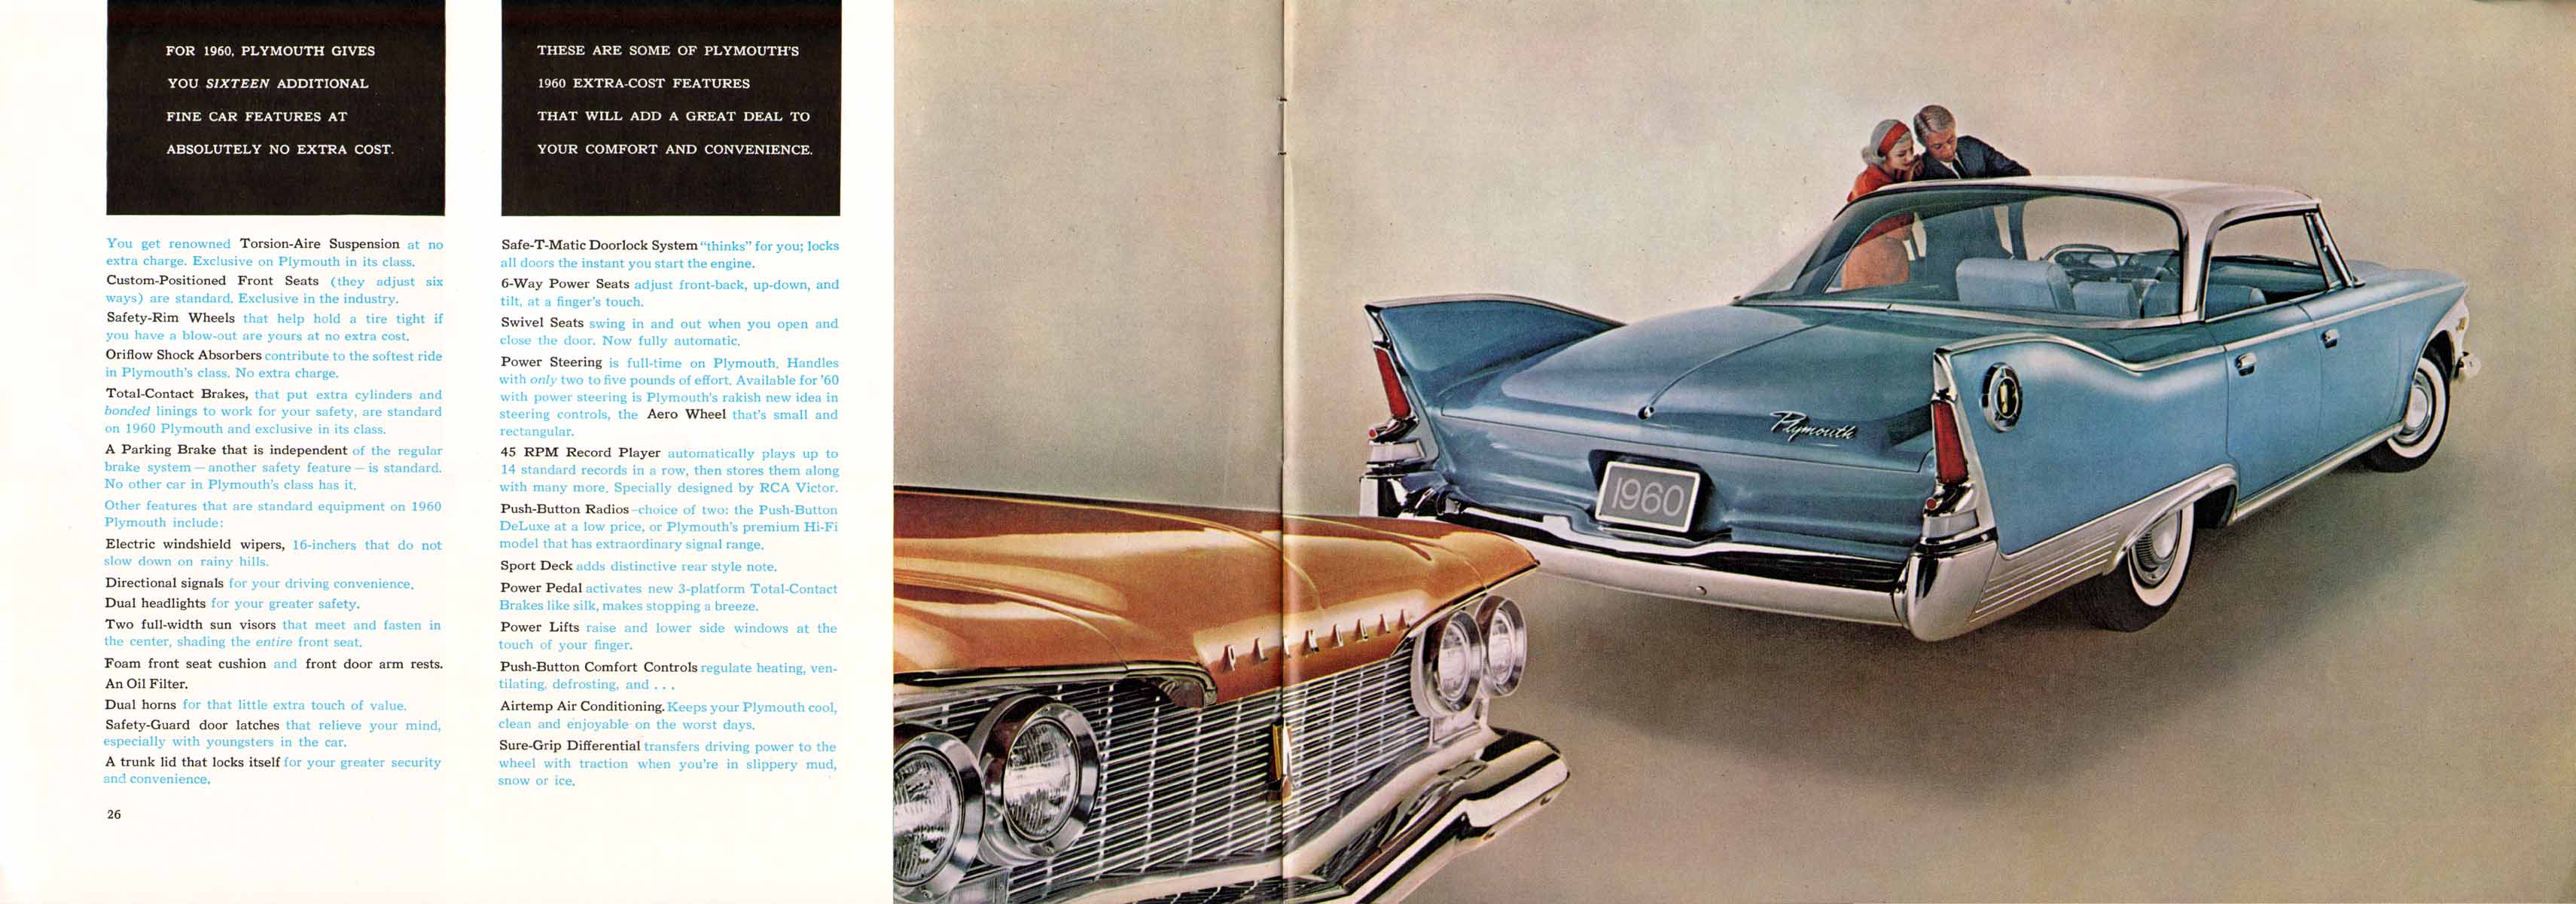 1960 Plymouth Prestige-26-27